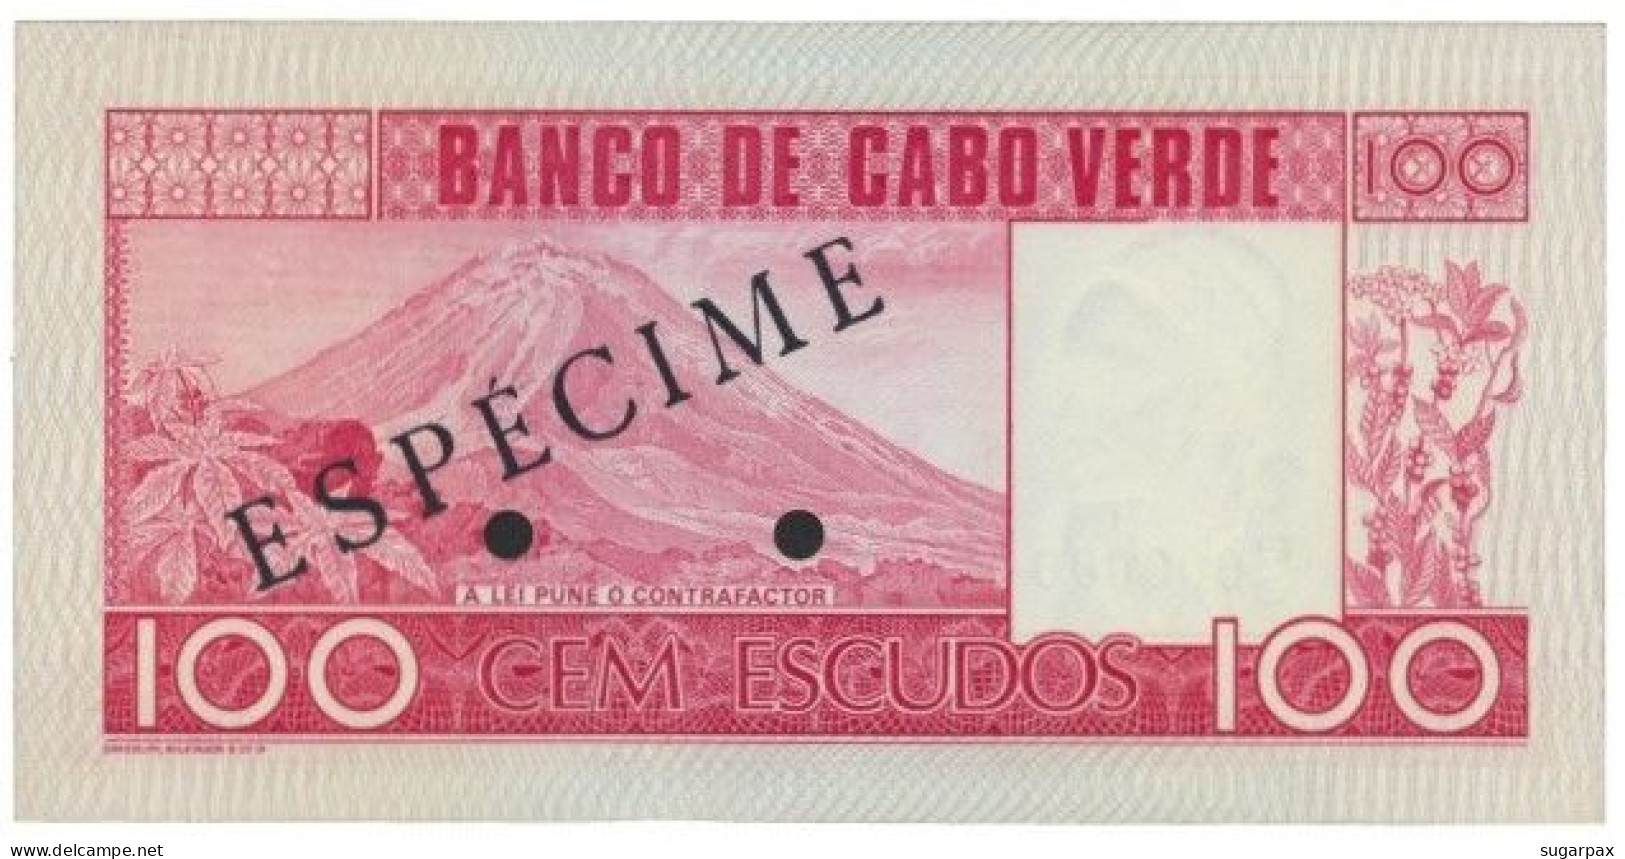 CAPE VERDE - 100 ESCUDOS - 20.01.1977 - Pick 54.s2 - Unc. - ESPÉCIME In BLACK - Cape Verde